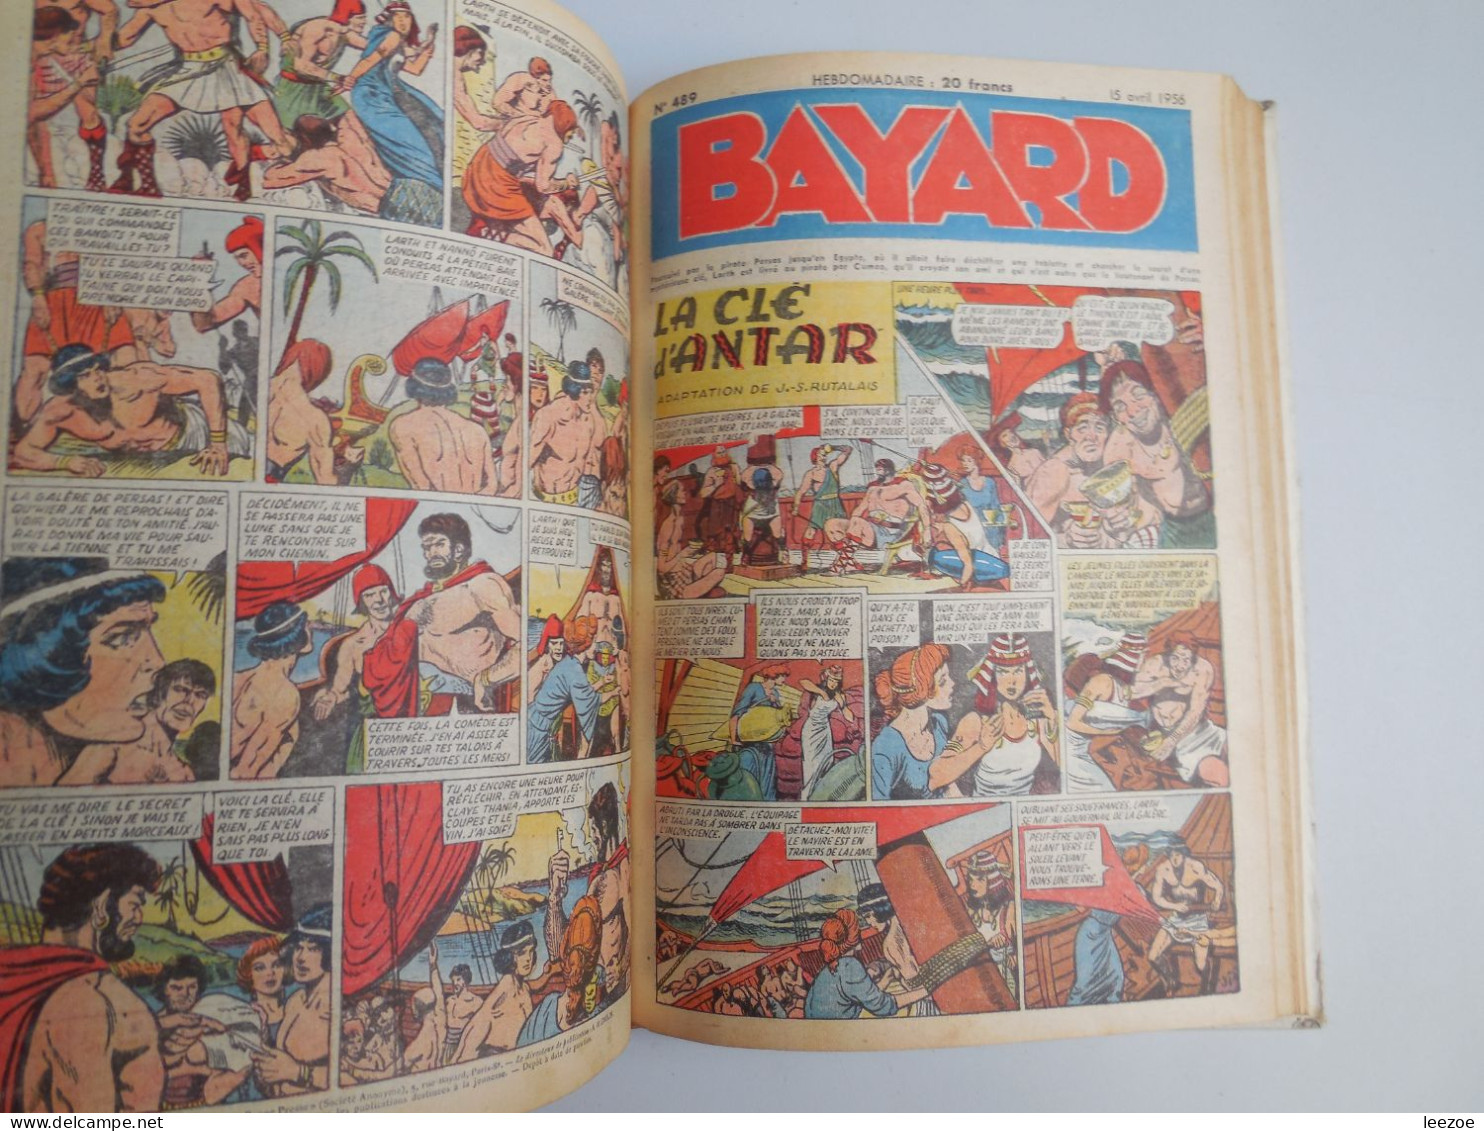 BD BAYARD, Recueil Bayard (Album du journal) Album N°19 (du N°474 à 499), complet...(ref 2.5.N5/)